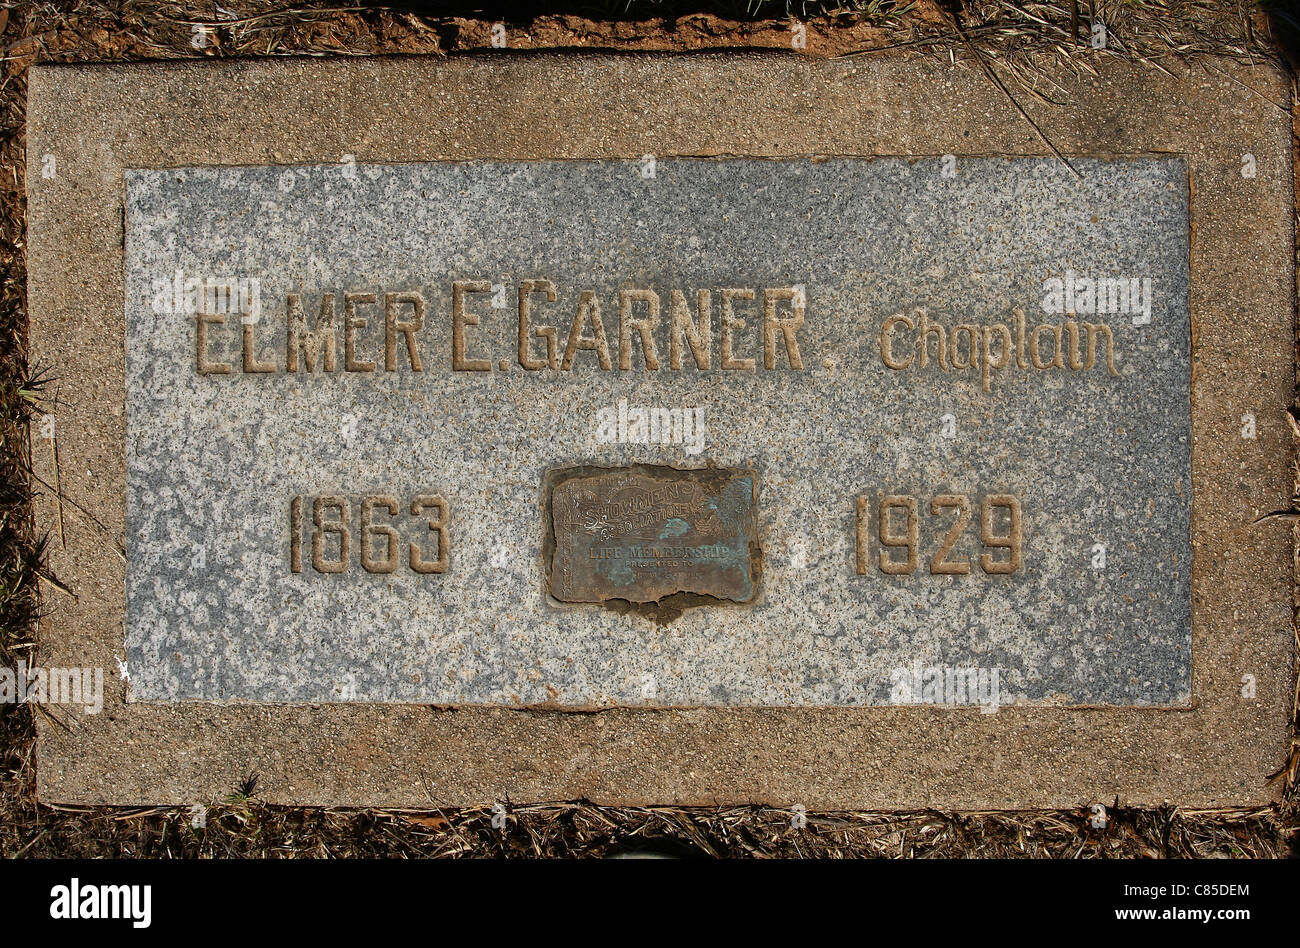 ELMER E. GARNER SHOWMEN'S REST AU EVERGREEN MEMORIAL PARK BOYLE HEIGHTS LOS ANGELES CALIFORNIA USA 08 Octobre 2011 Banque D'Images